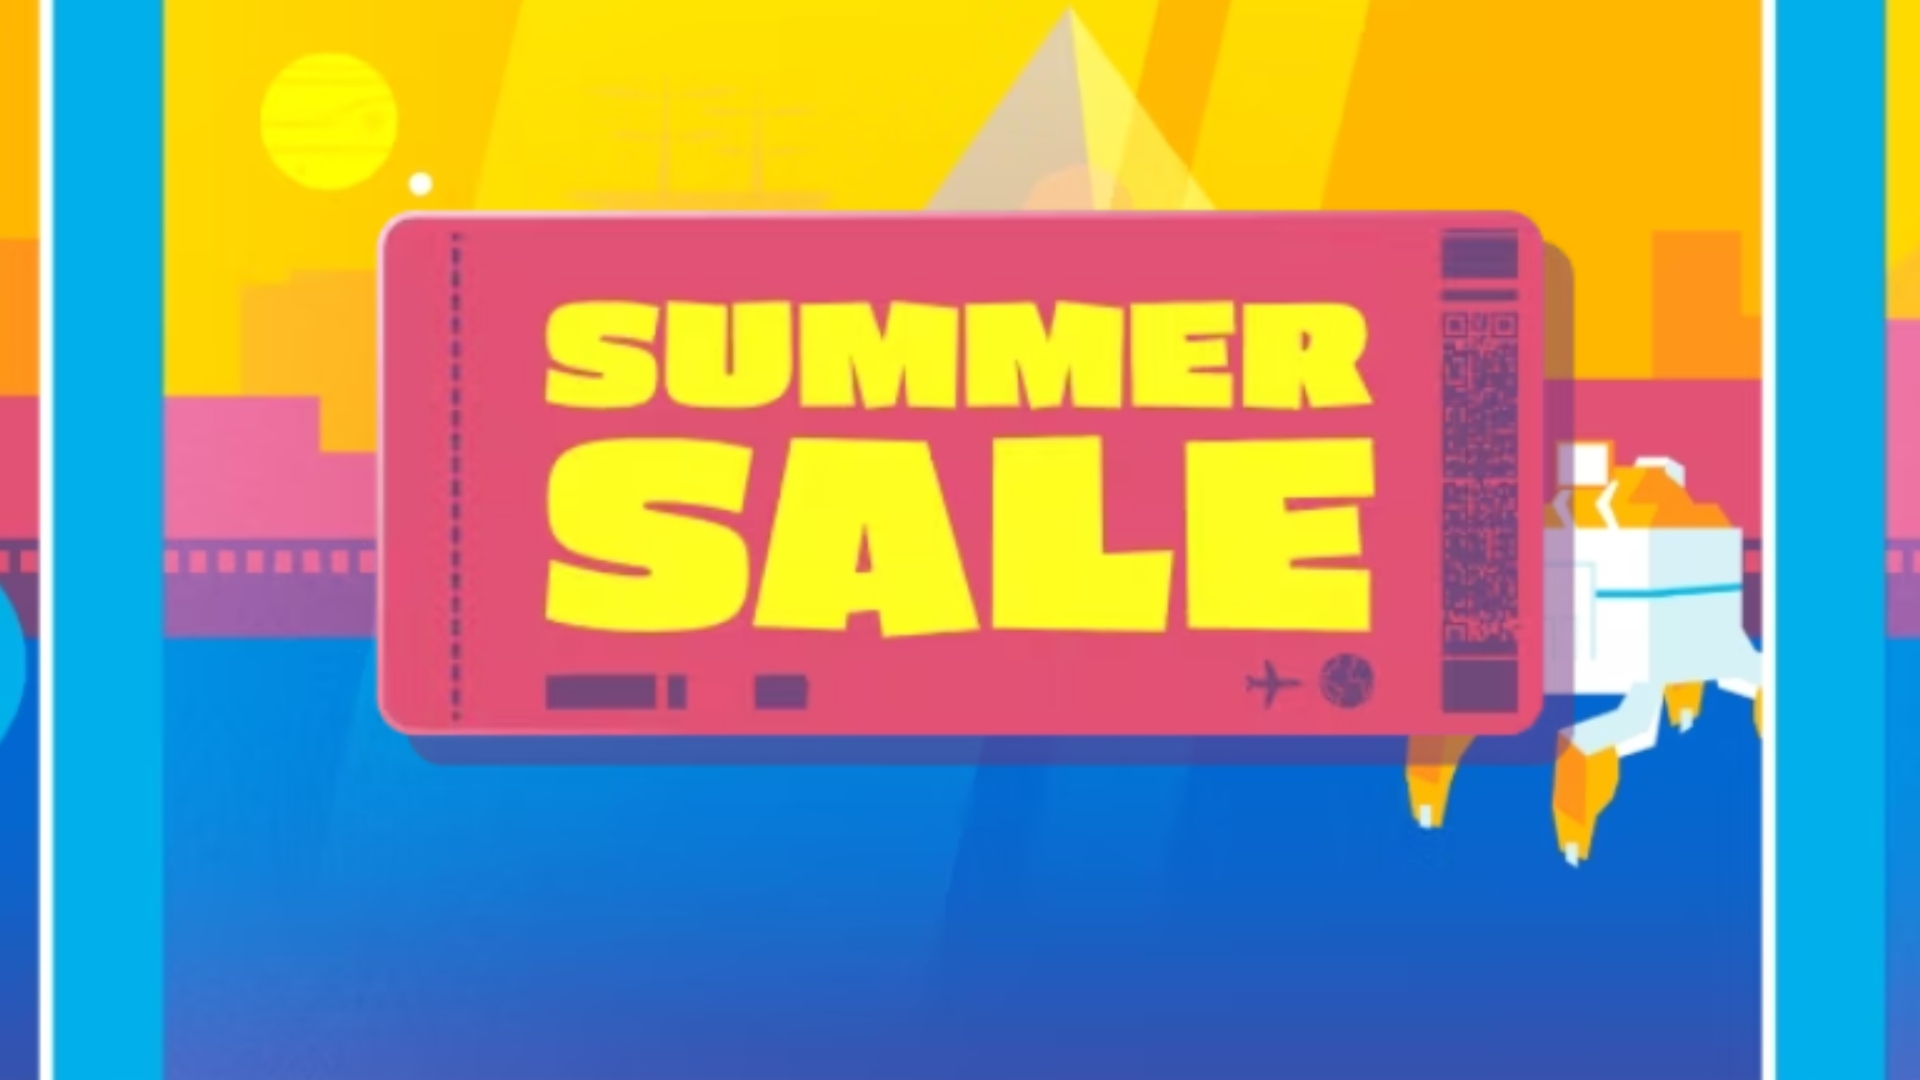 Humble Bundle summer sale logo.